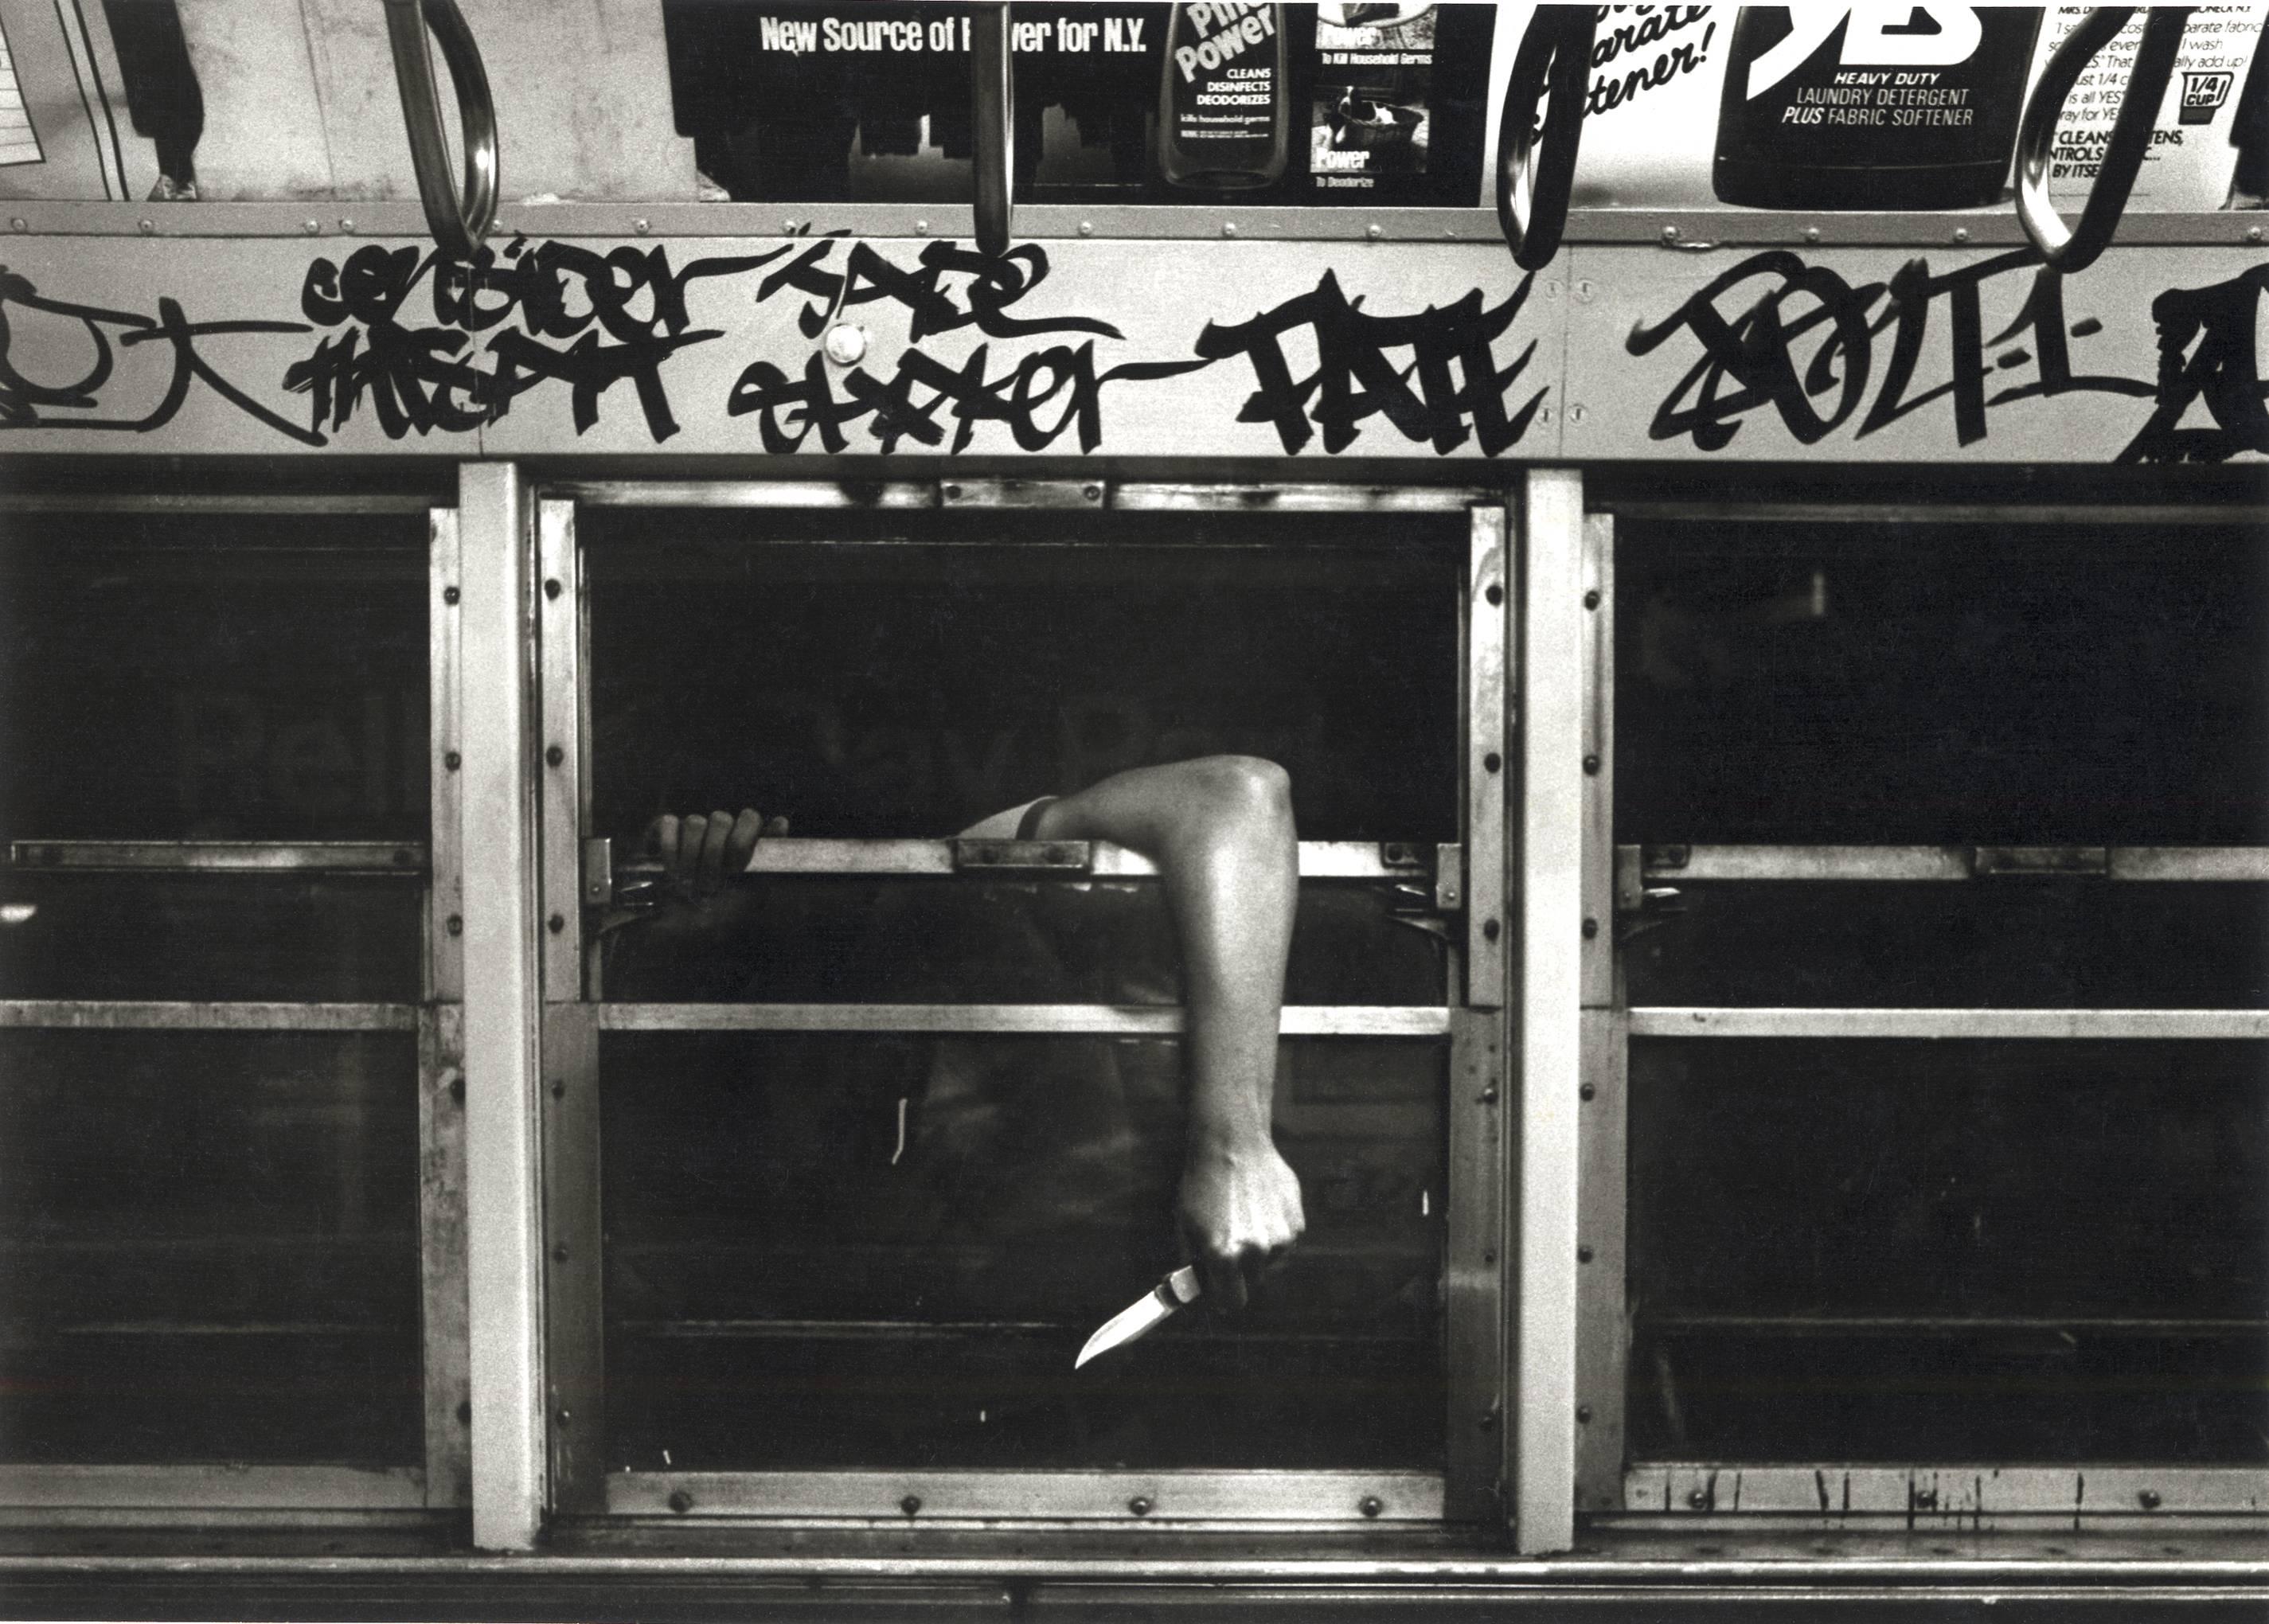 Subway 37, graffiti, black and white photograph, NYC, 1980s, 1970s, edgy